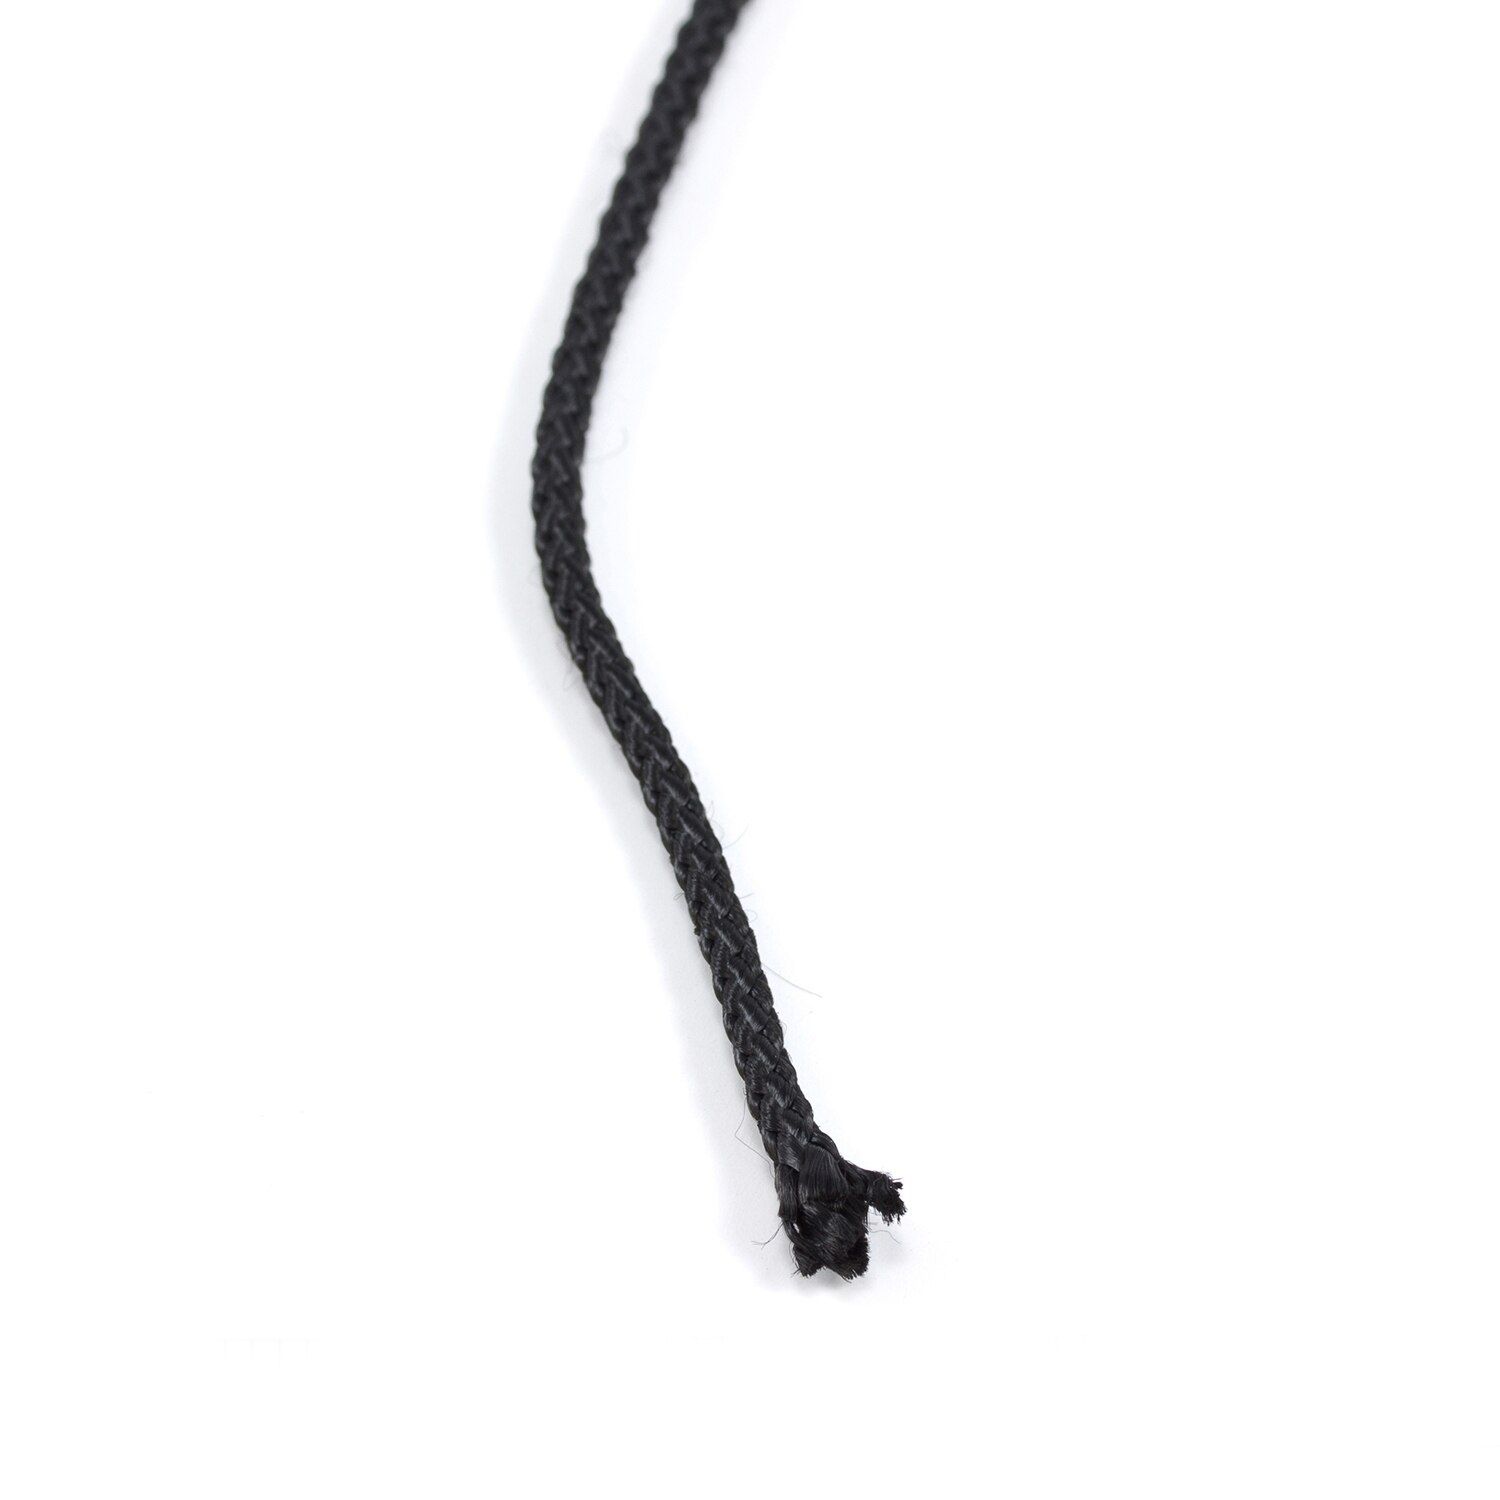 Diamond Braided Nylon Cord #4 1/8 x 1000' Black